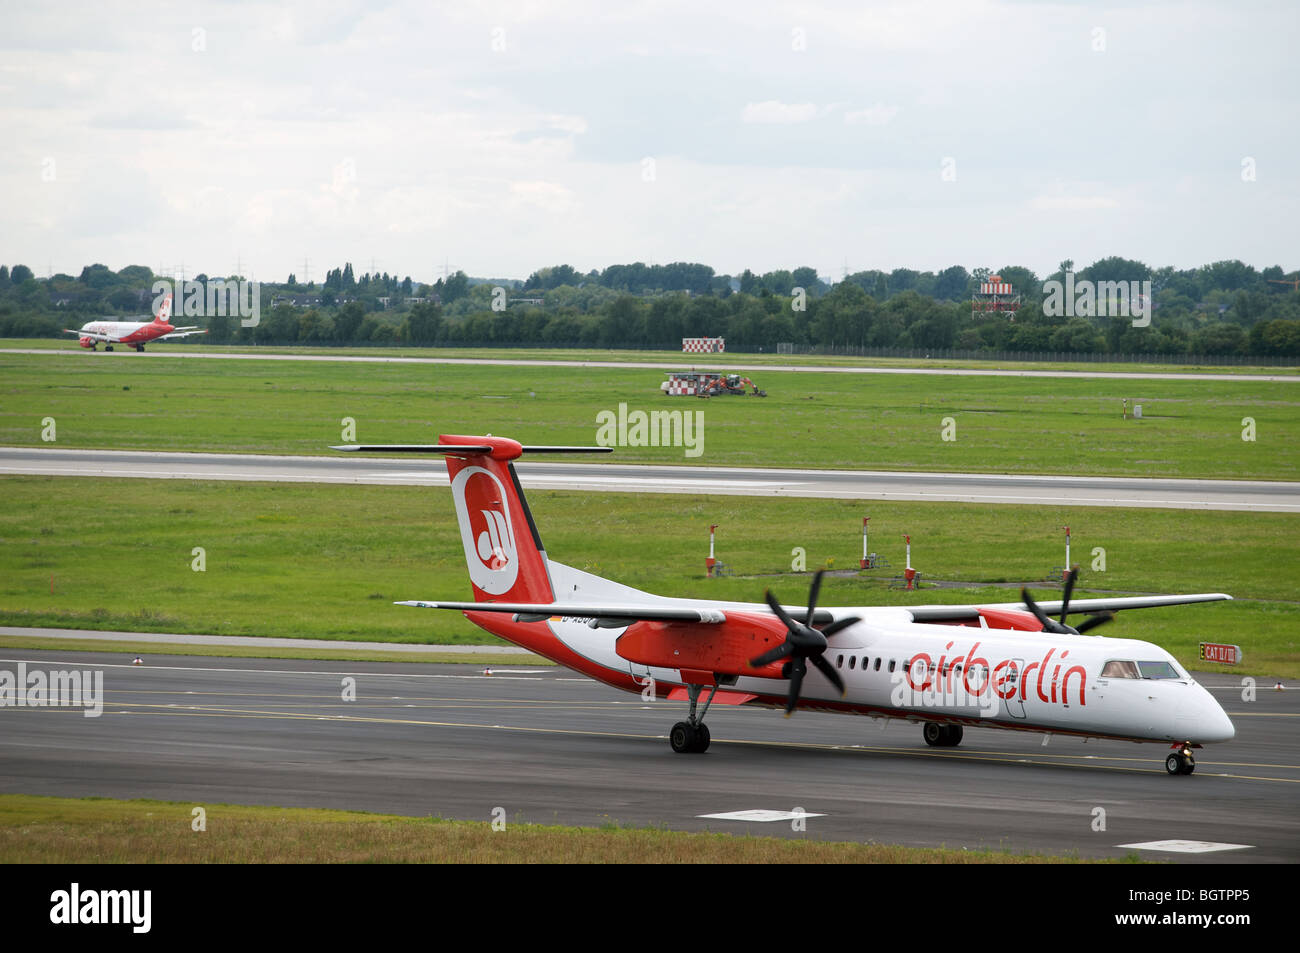 Air Berlin Bombardier Q400 turbo prop passenger airliner, Dusseldorf International airport, Germany. Stock Photo